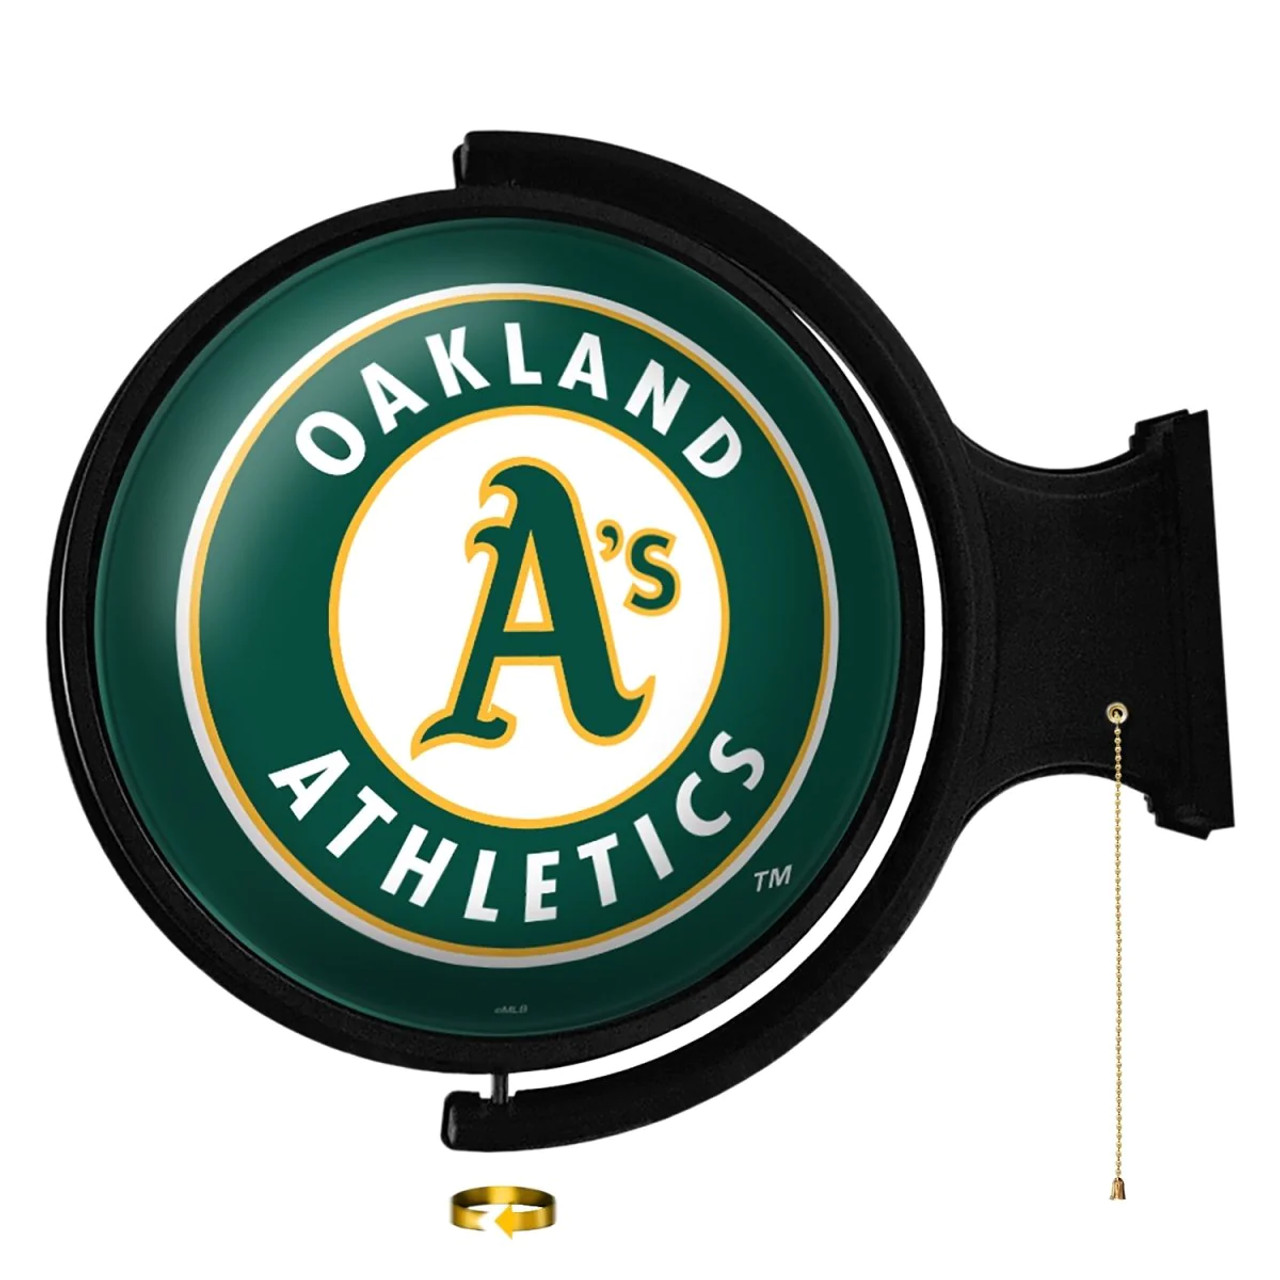 MBOAKL-115-01, OAK, Oakland, Athletics,  Original, Round, Rotating, Lighted, Wall, Sign, The Fan-Brand, 704384956549, LED